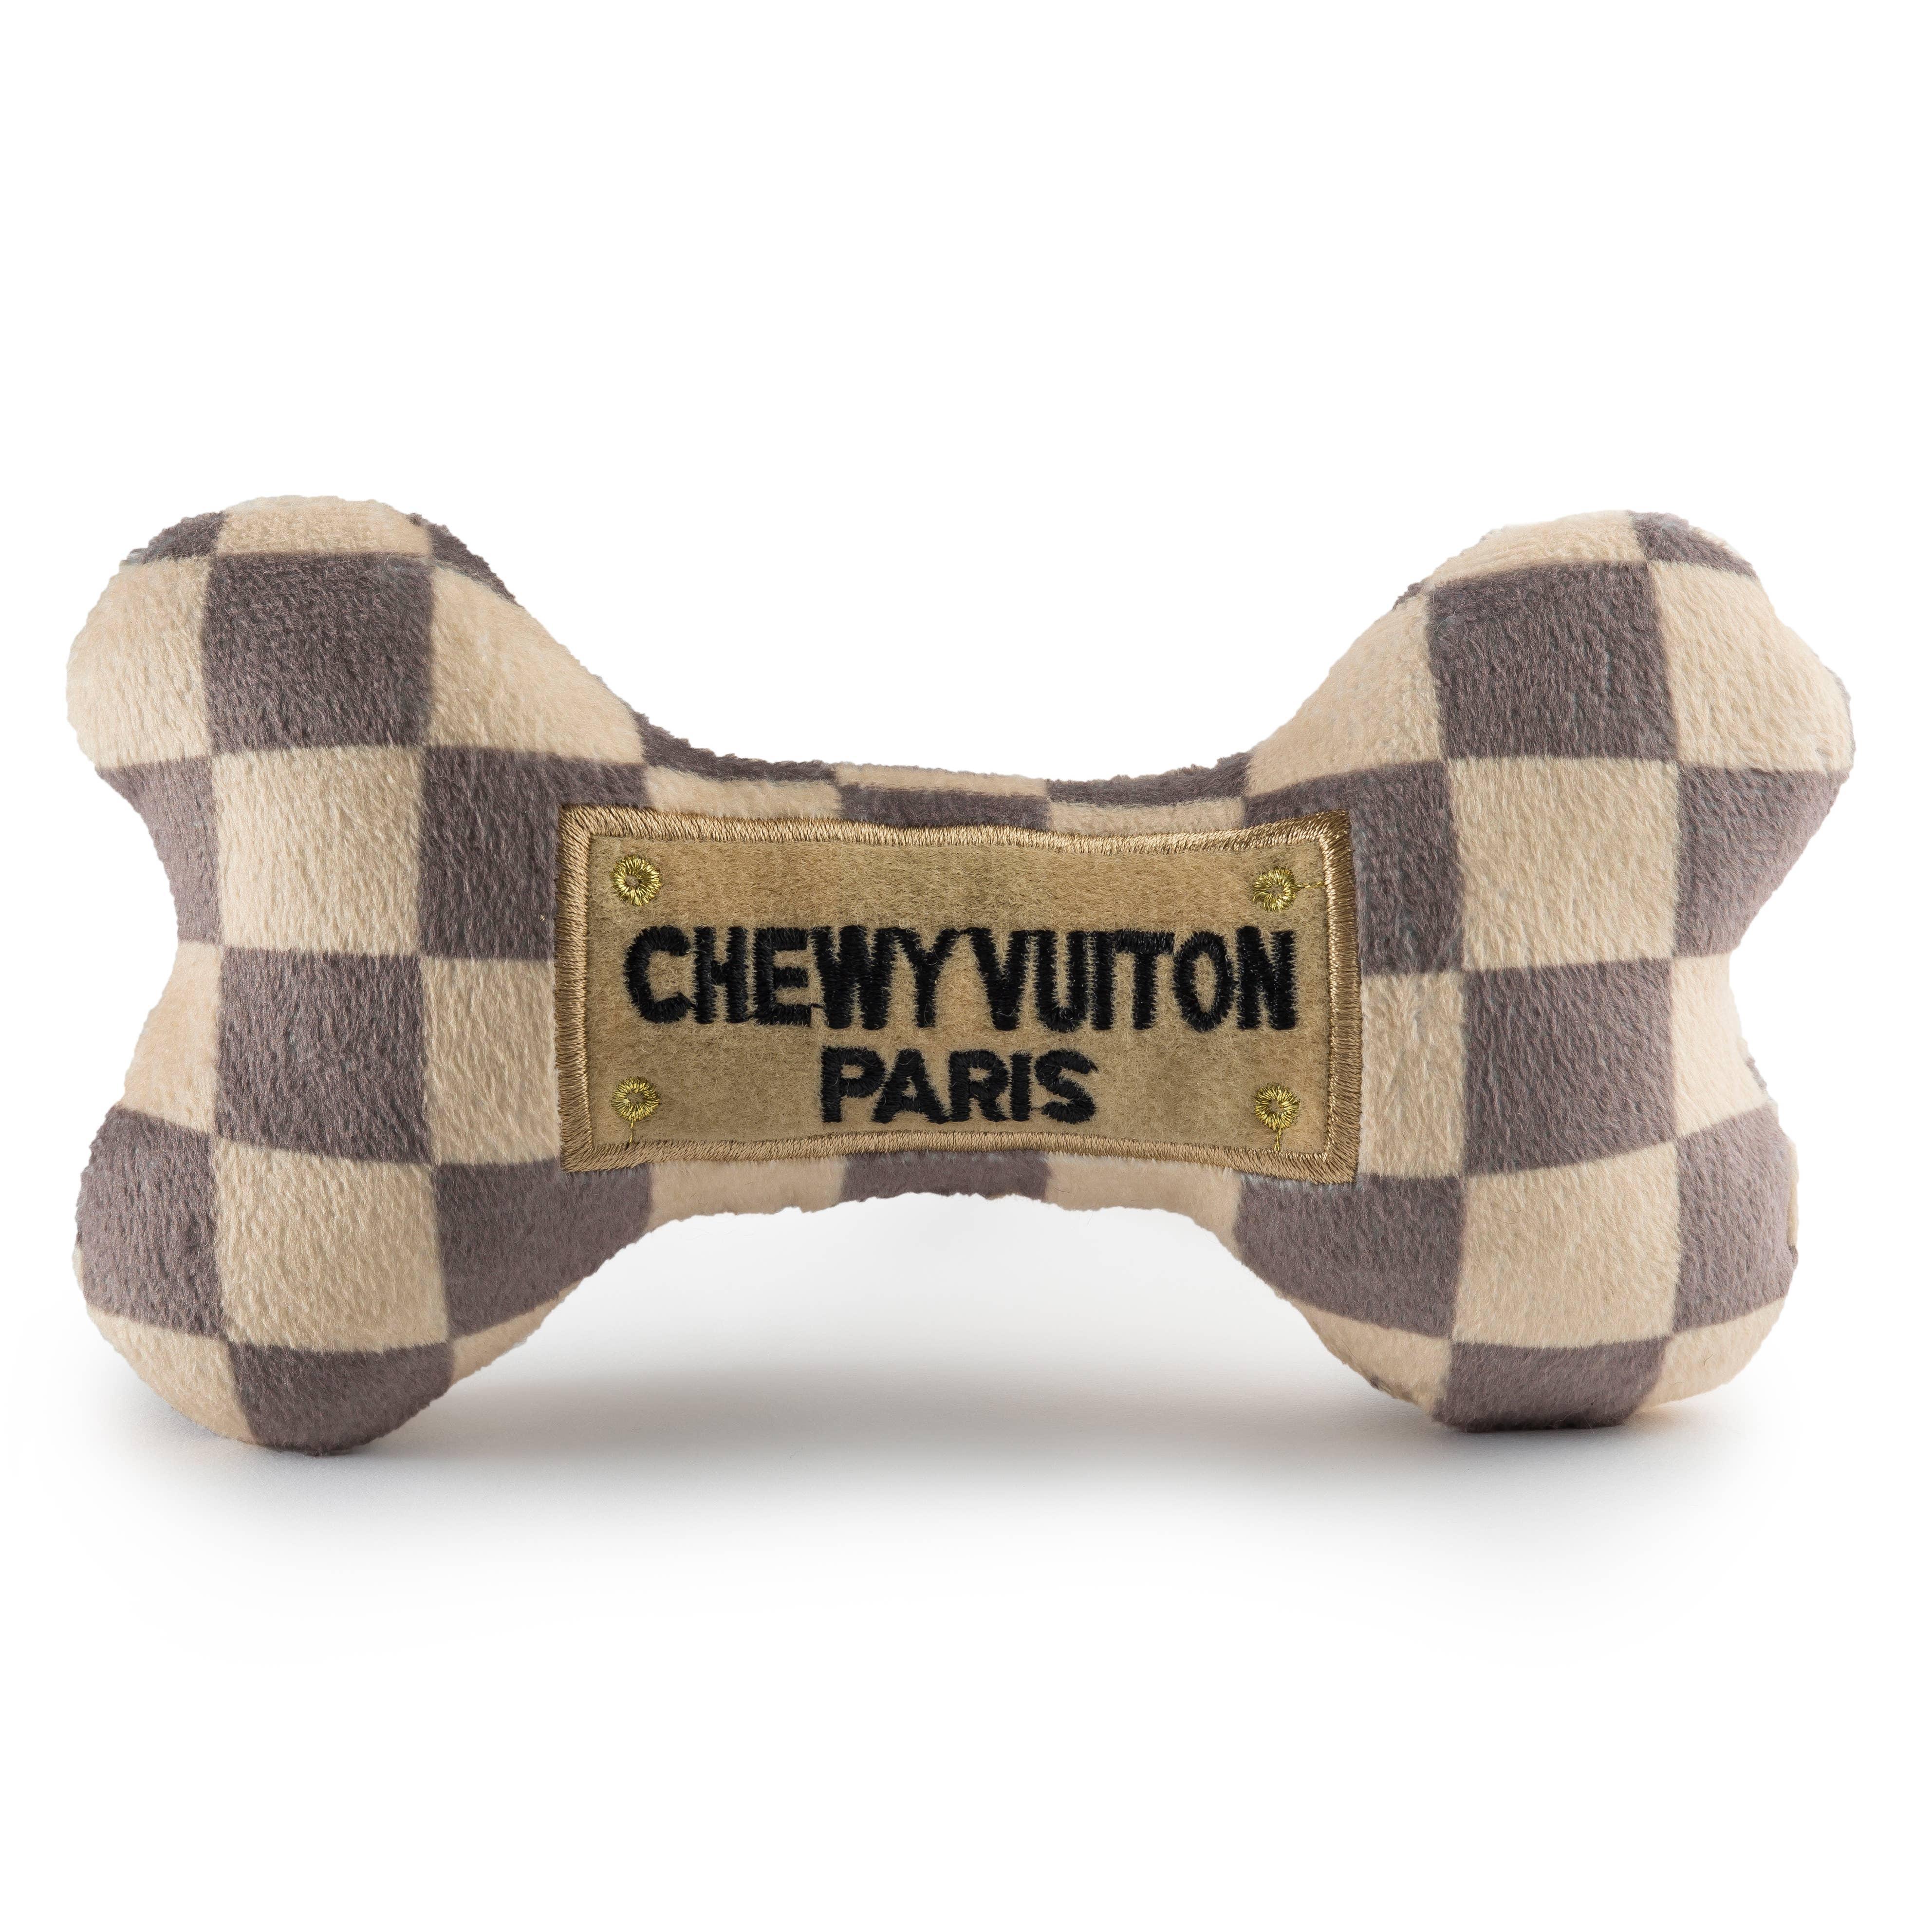 Checker Chewy Vuiton Bones - Frisbeefreunde